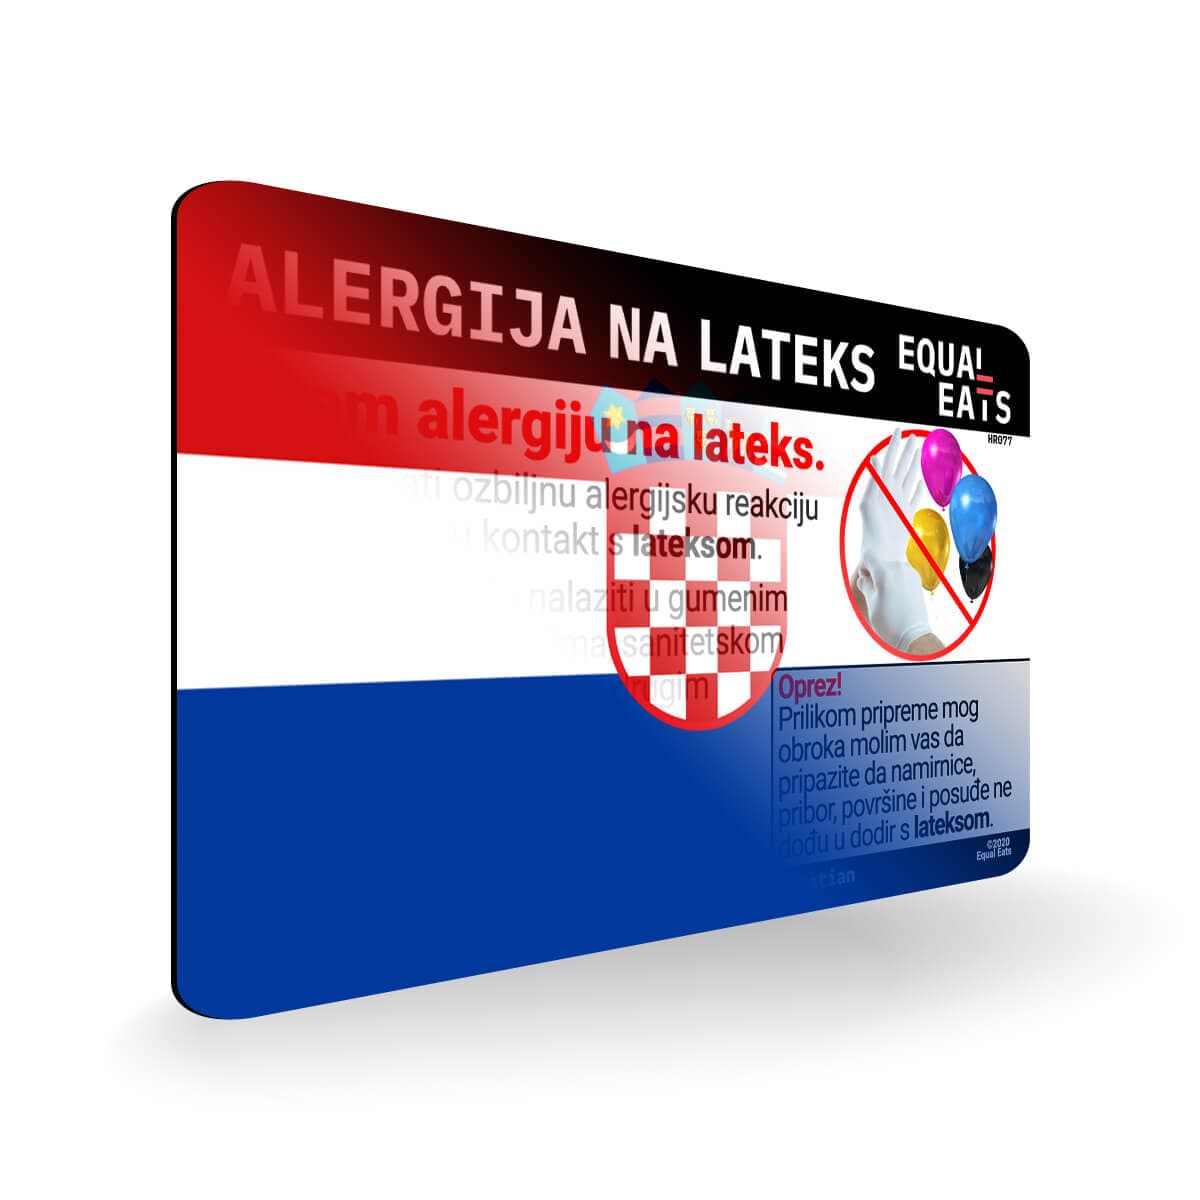 Latex Allergy in Croatian. Latex Allergy Travel Card for Croatia